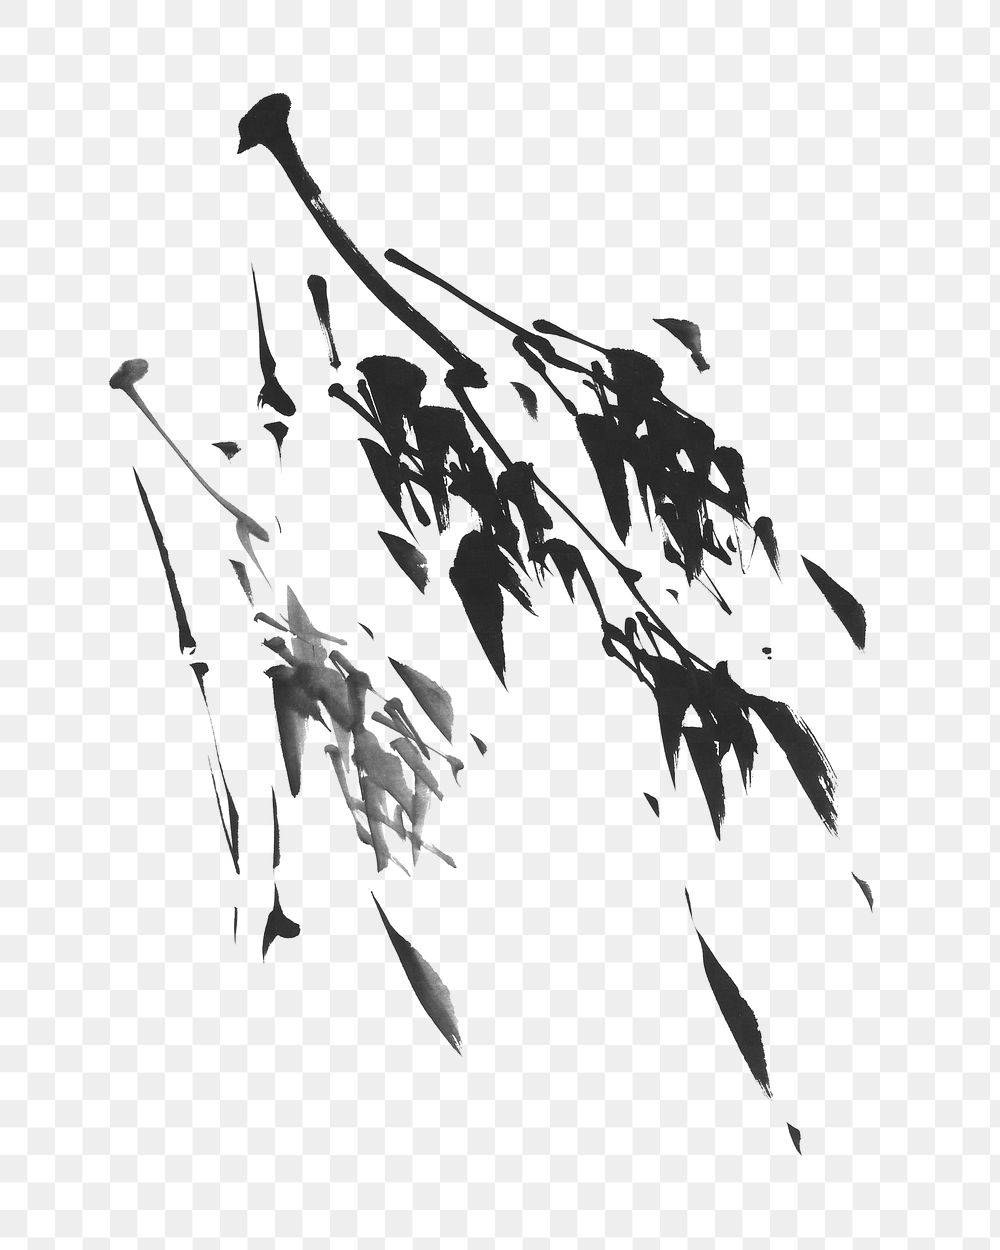 PNG Bamboo tree, vintage botanical illustration by Taihō Shōkon, transparent background.  Remixed by rawpixel. 